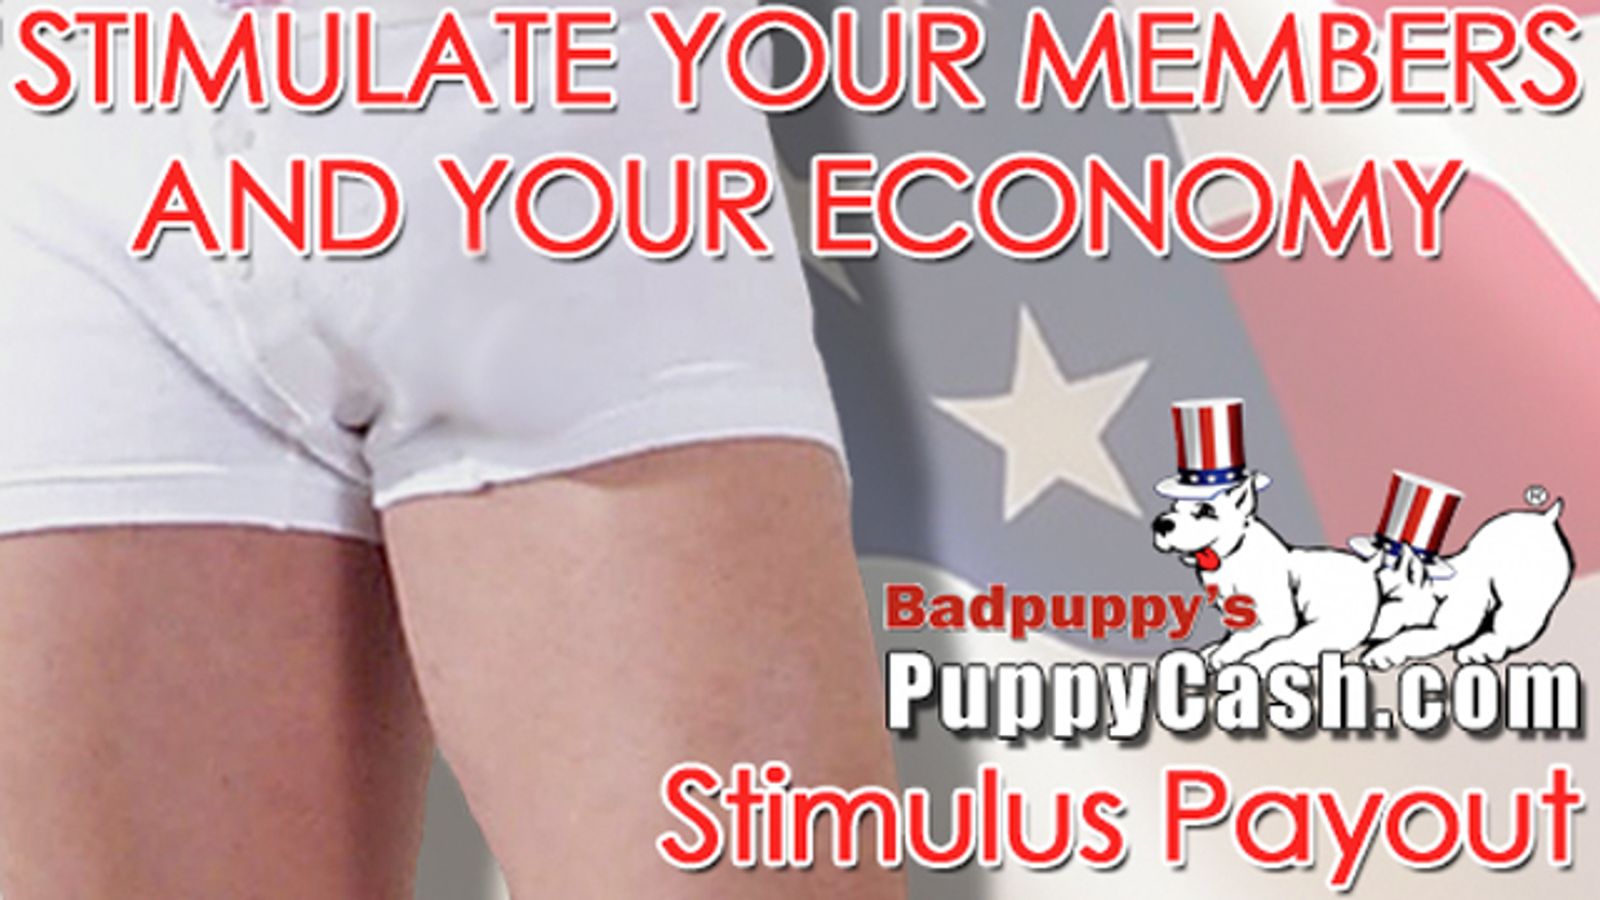 Badpuppy Offers Affiliates ‘Stimulus Payout’